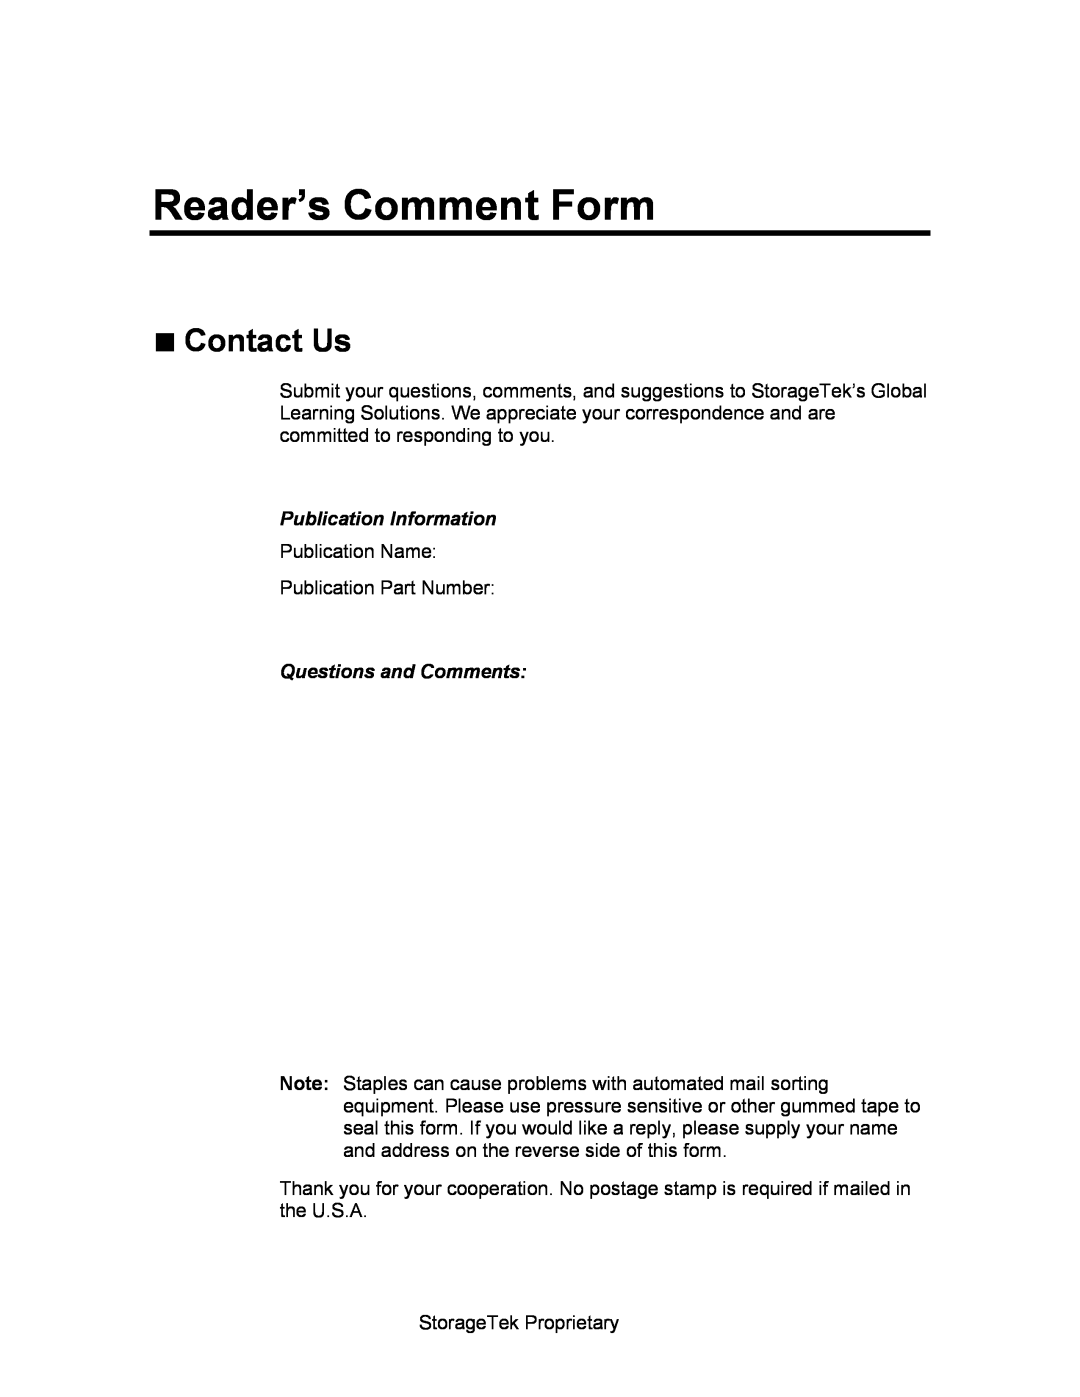 StorageTek 312564001 manual ∎Contact Us, Reader’s Comment Form, Publication Information, Questions and Comments 